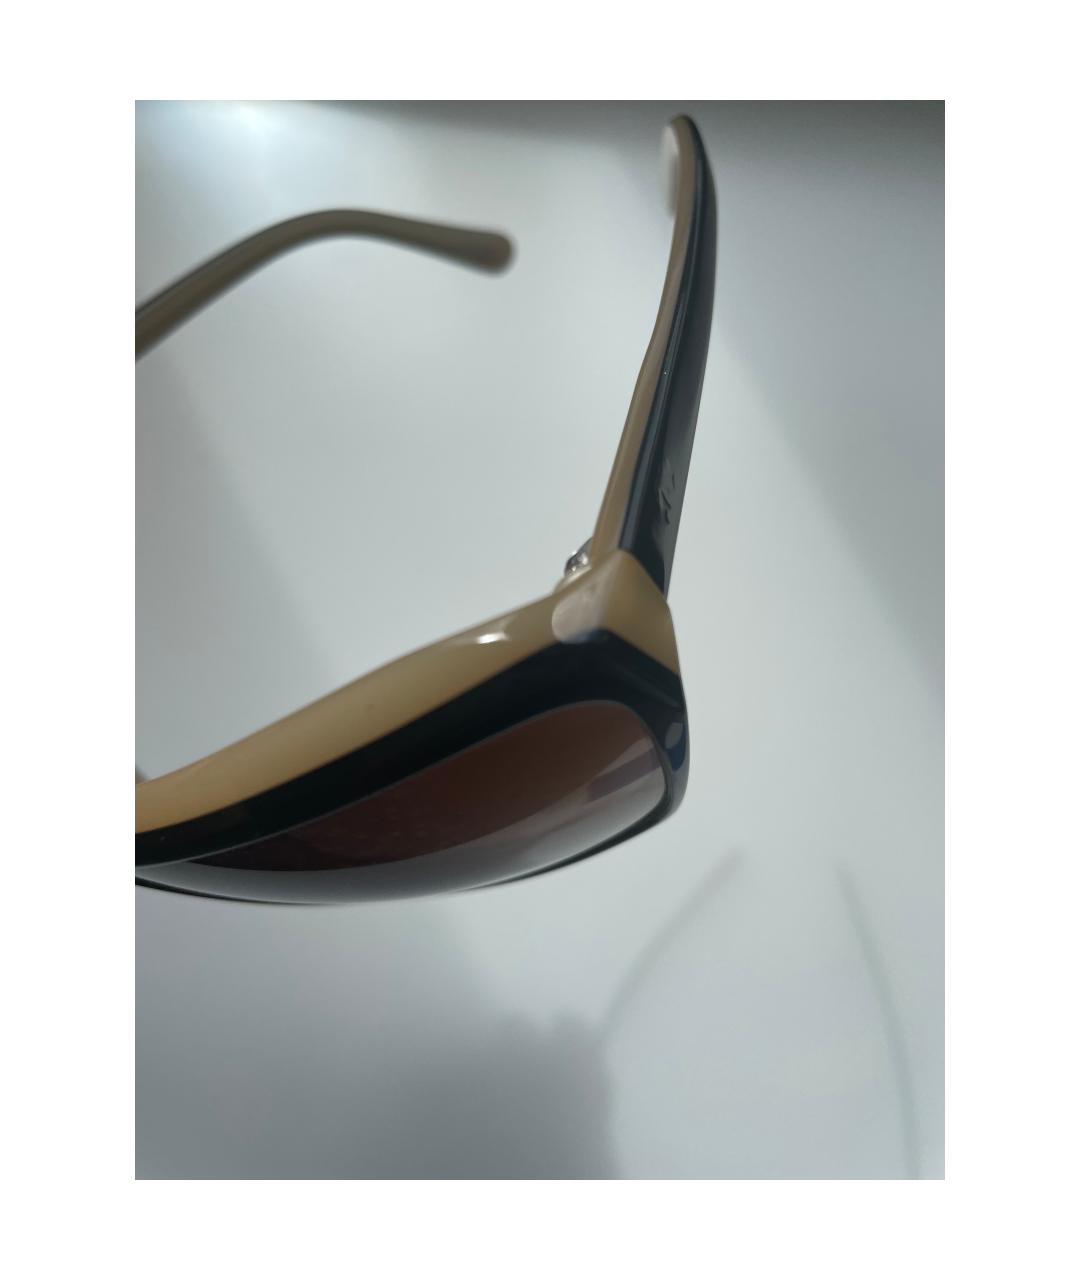 CHANEL PRE-OWNED Мульти пластиковые солнцезащитные очки, фото 7